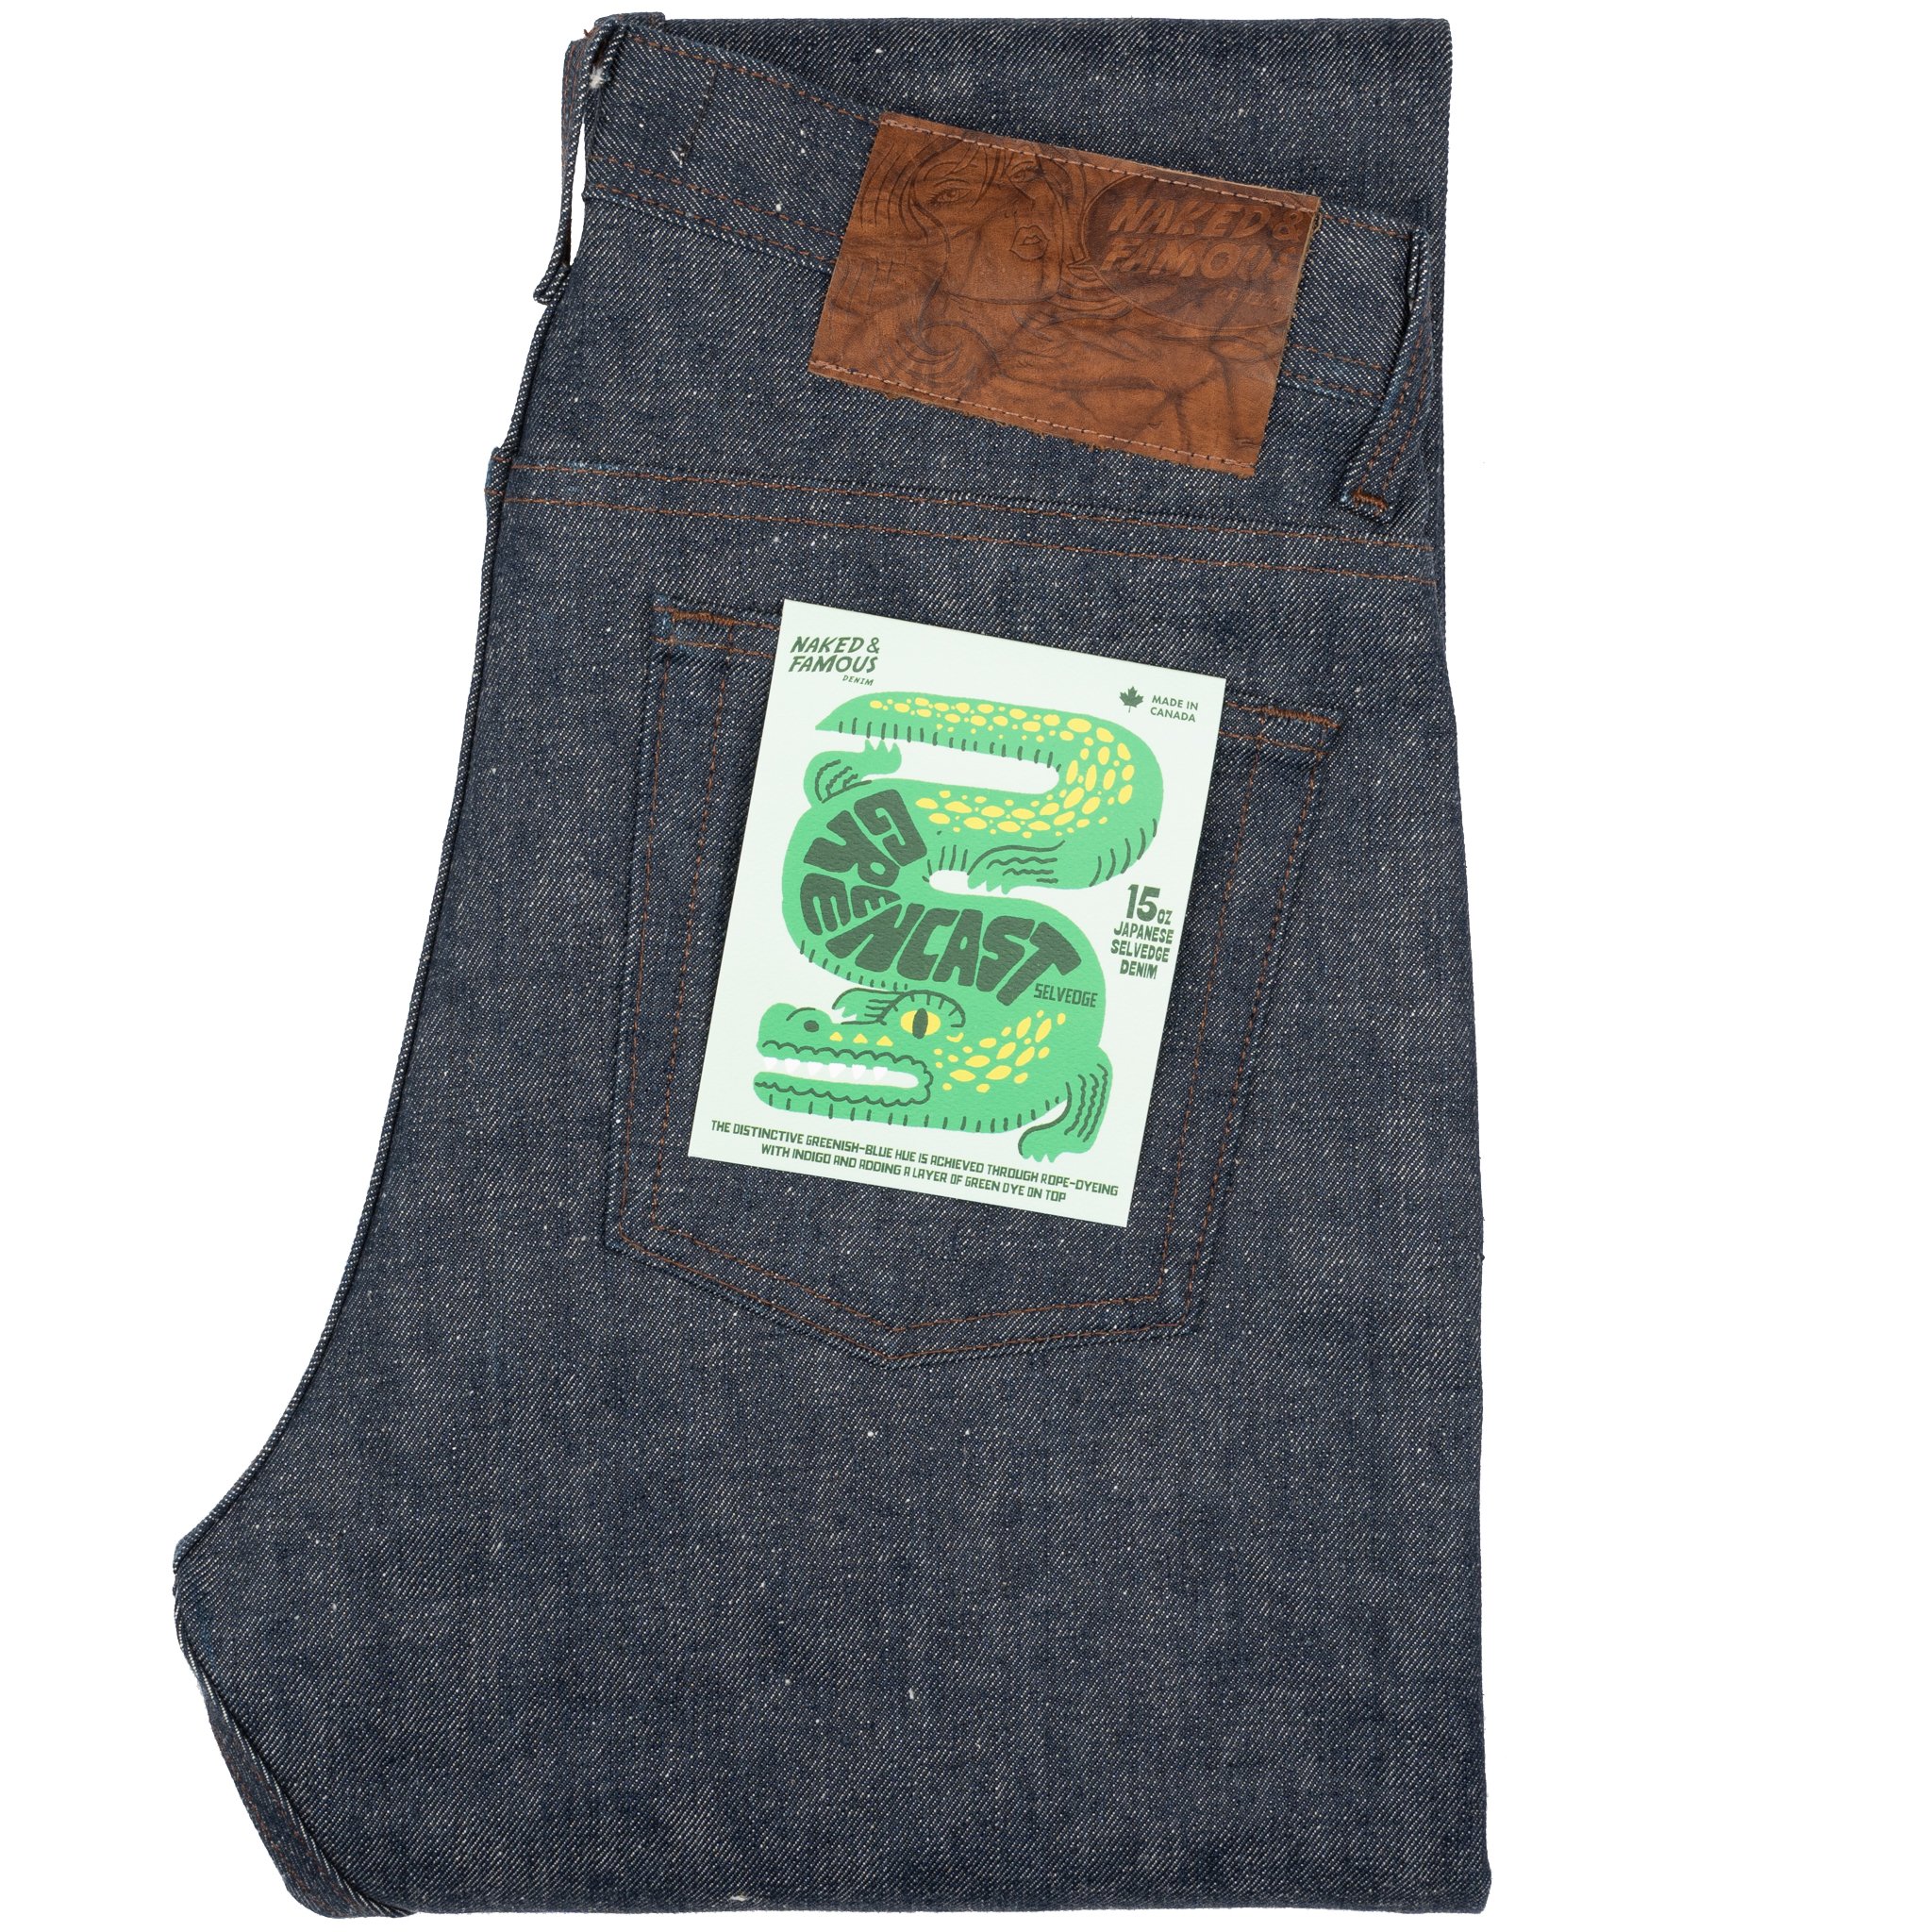  Greencast Slub Selvedge - Jeans 